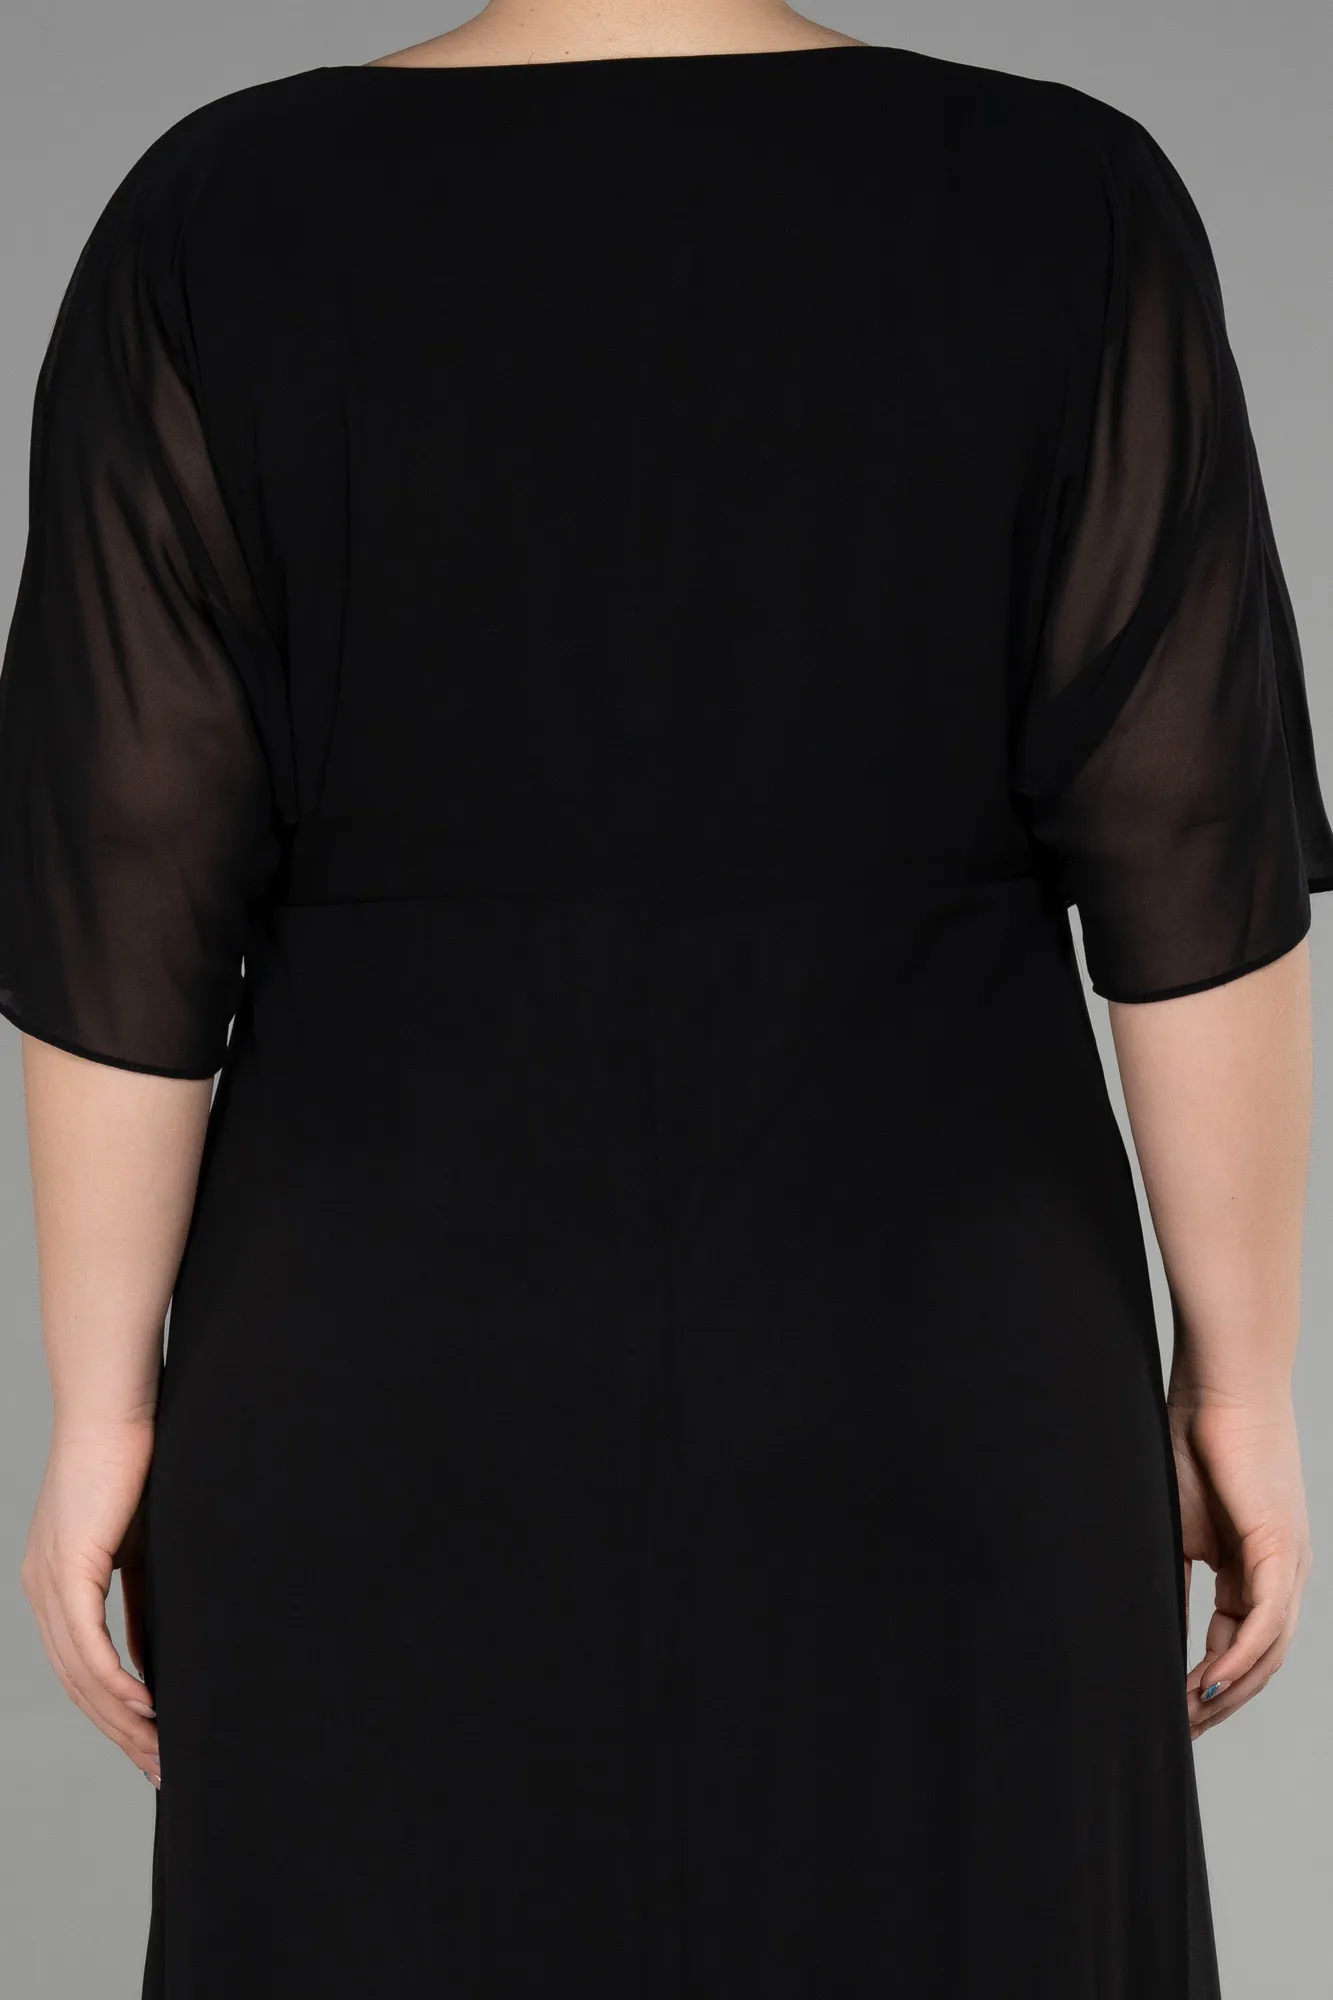 Black-Long Chiffon Designer Plus Size Gowns ABU3651